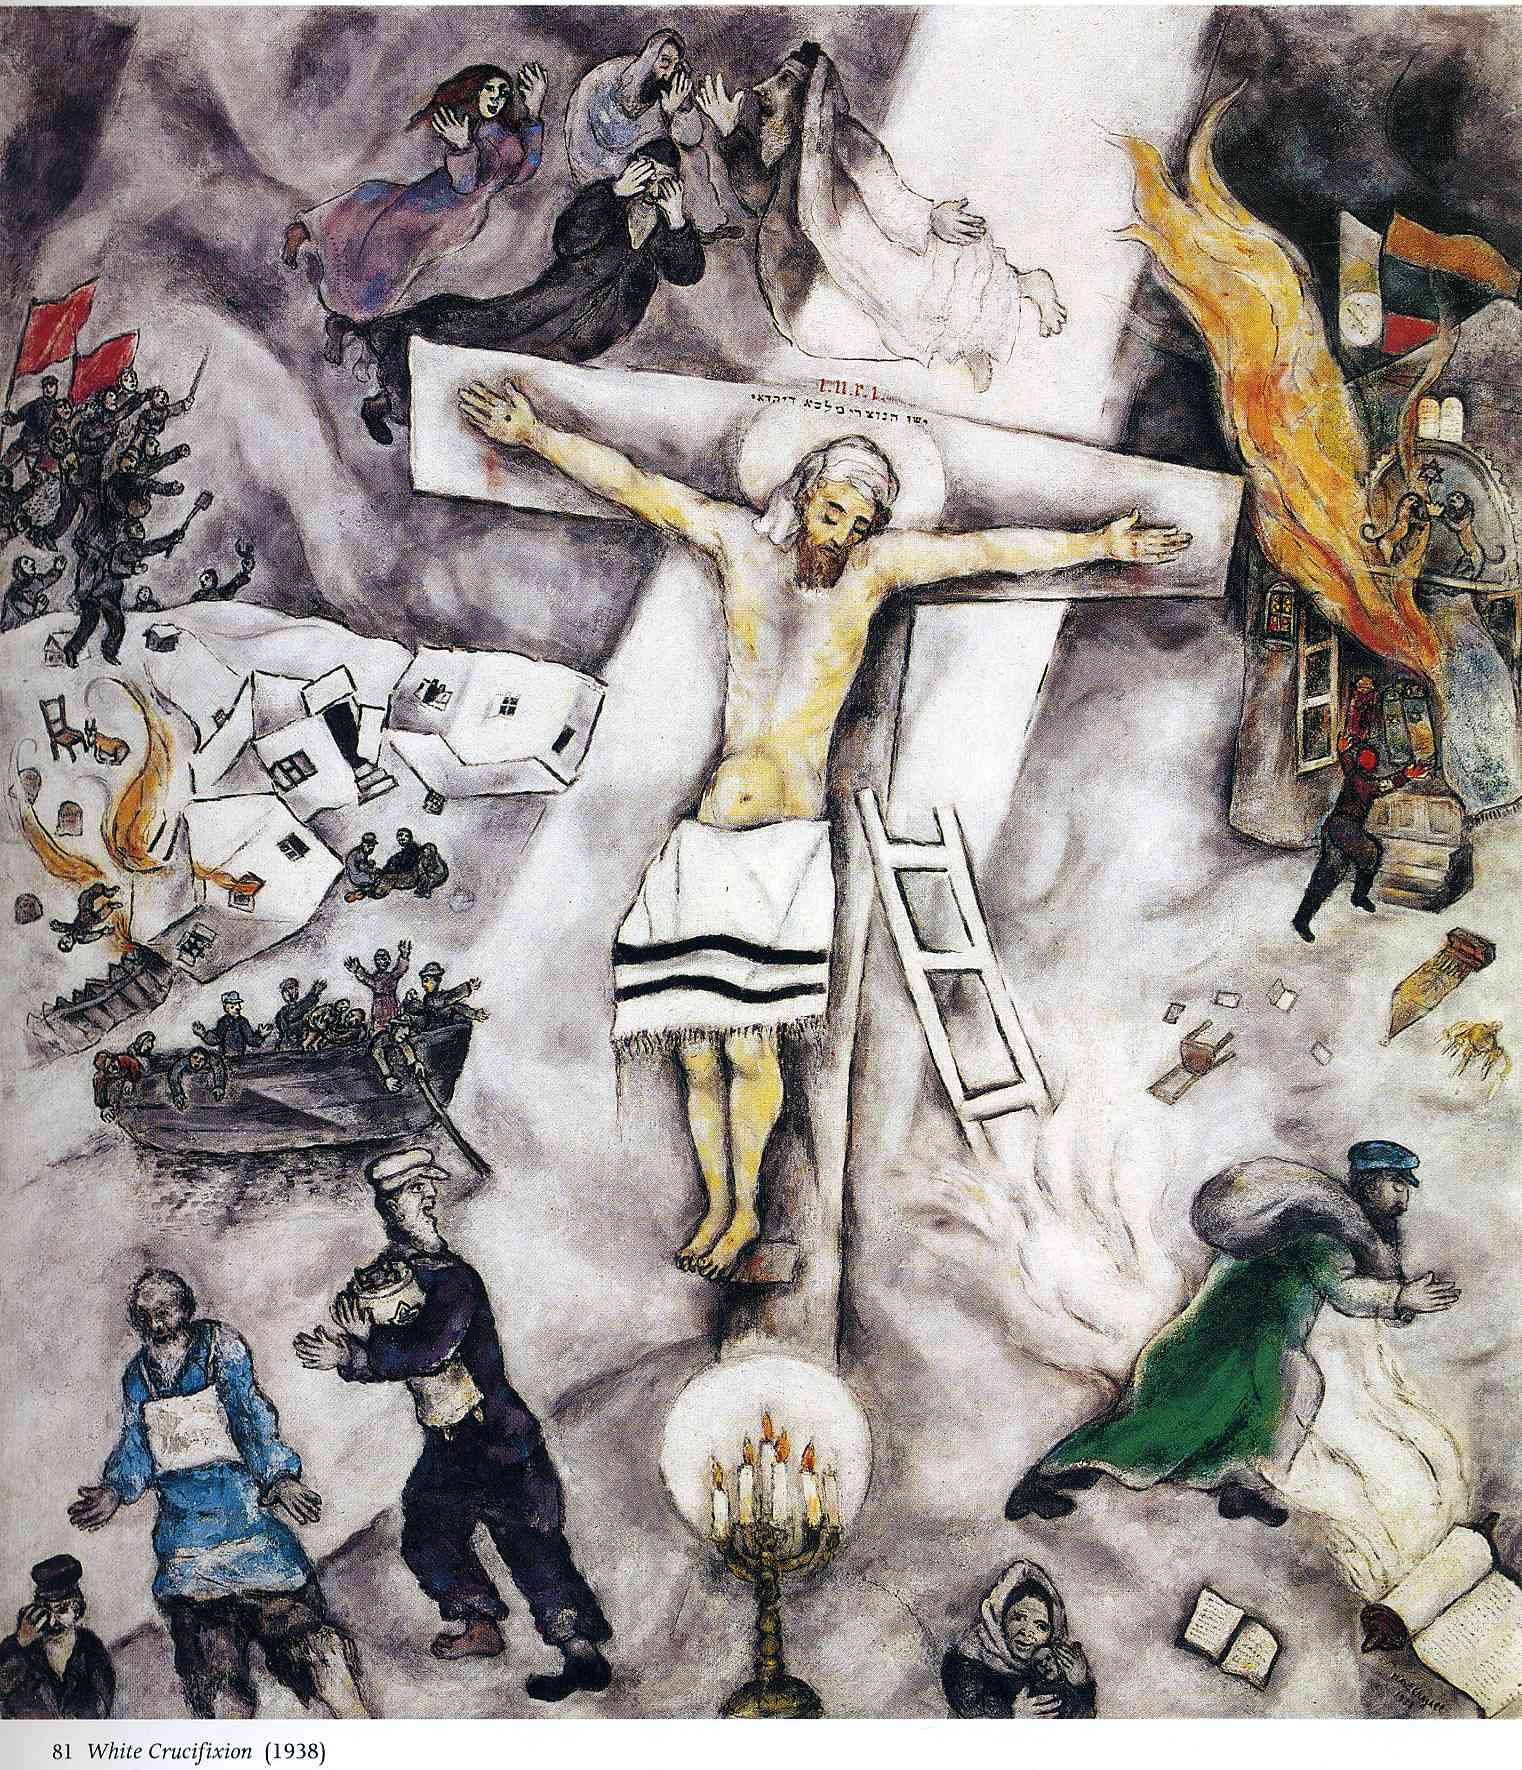 White Crucifixion (1938).